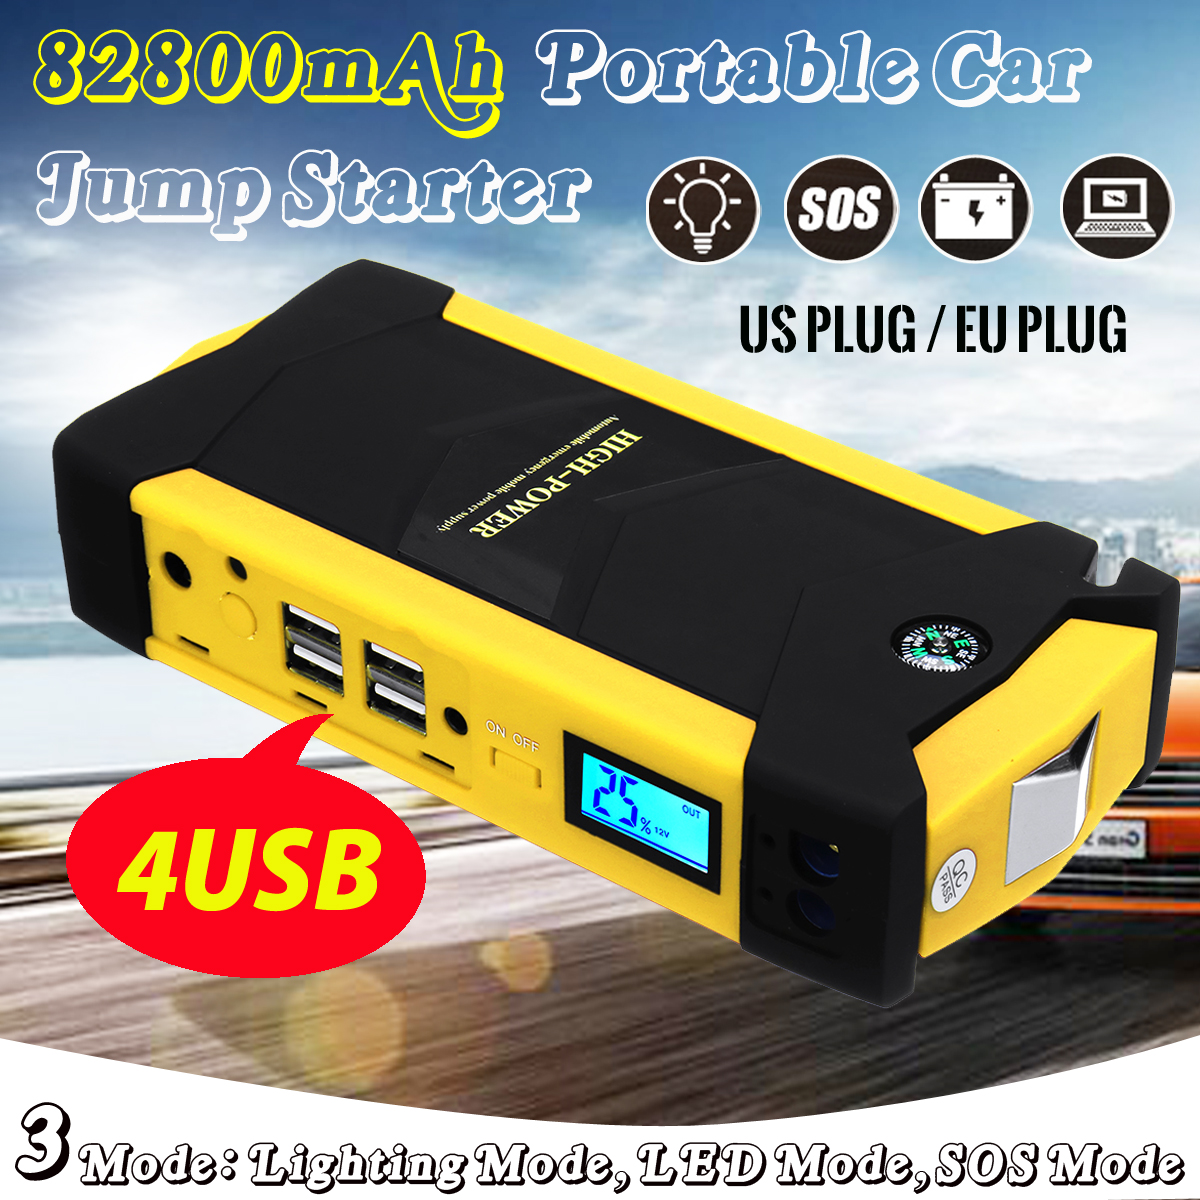 4USB Car Jump Starter 82800mAh Jump Starter Battery Pack Portable Boaster Power Bank Dual Start